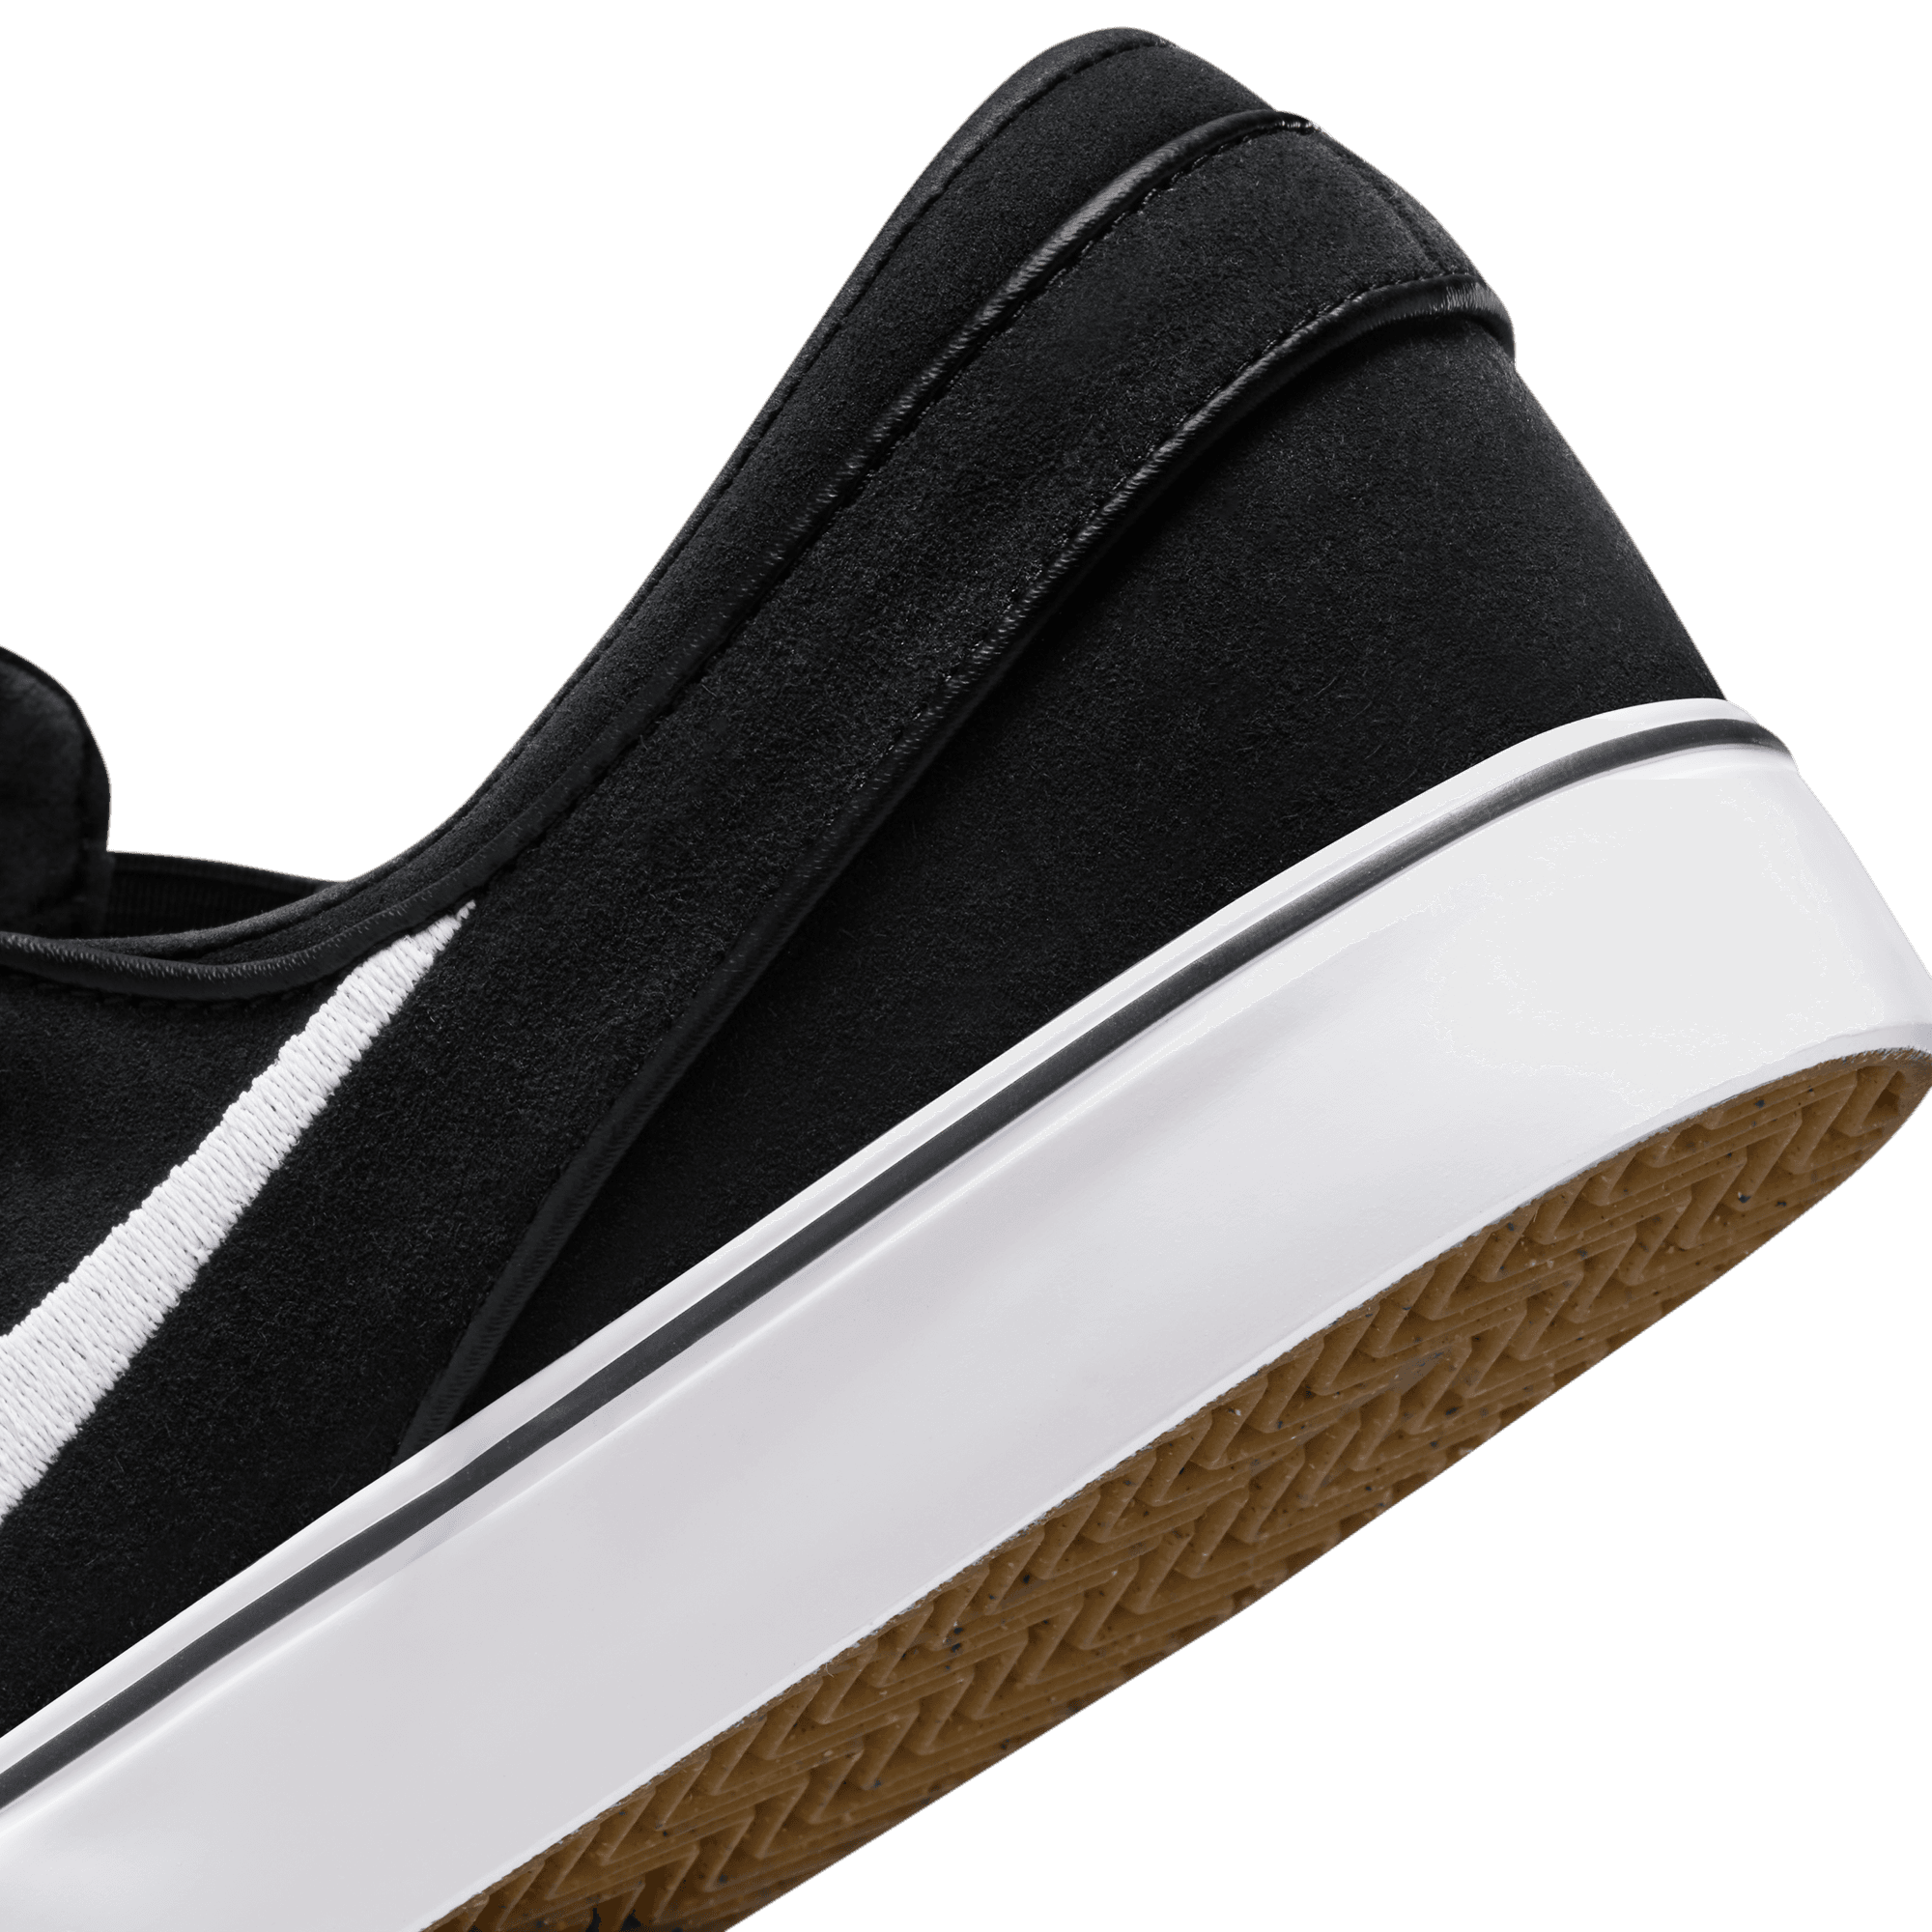 Black/White Janoski+ Nike SB Slip On Shoe Detail